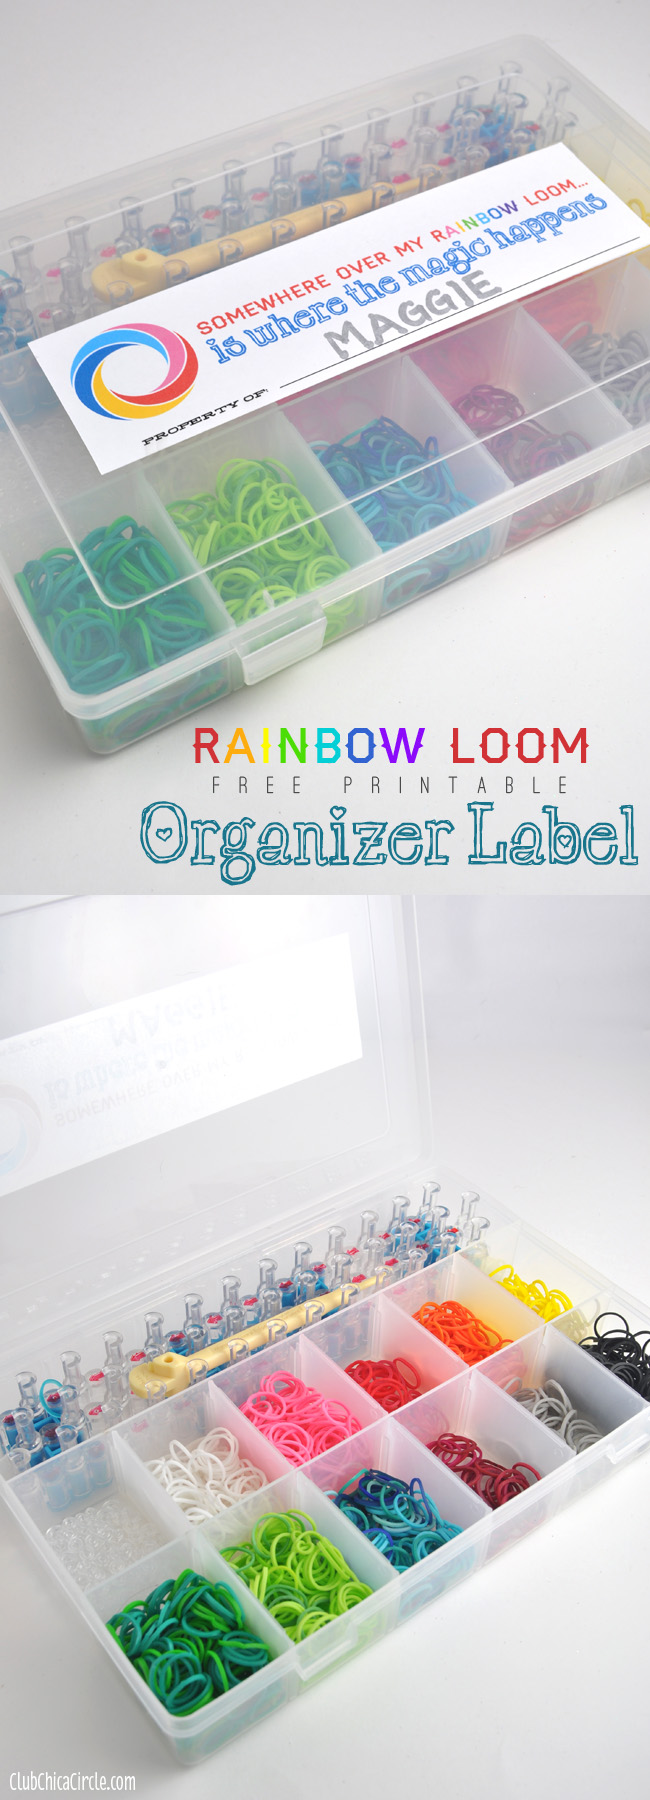 Rainbow Loom Organizer Free Printable Labels